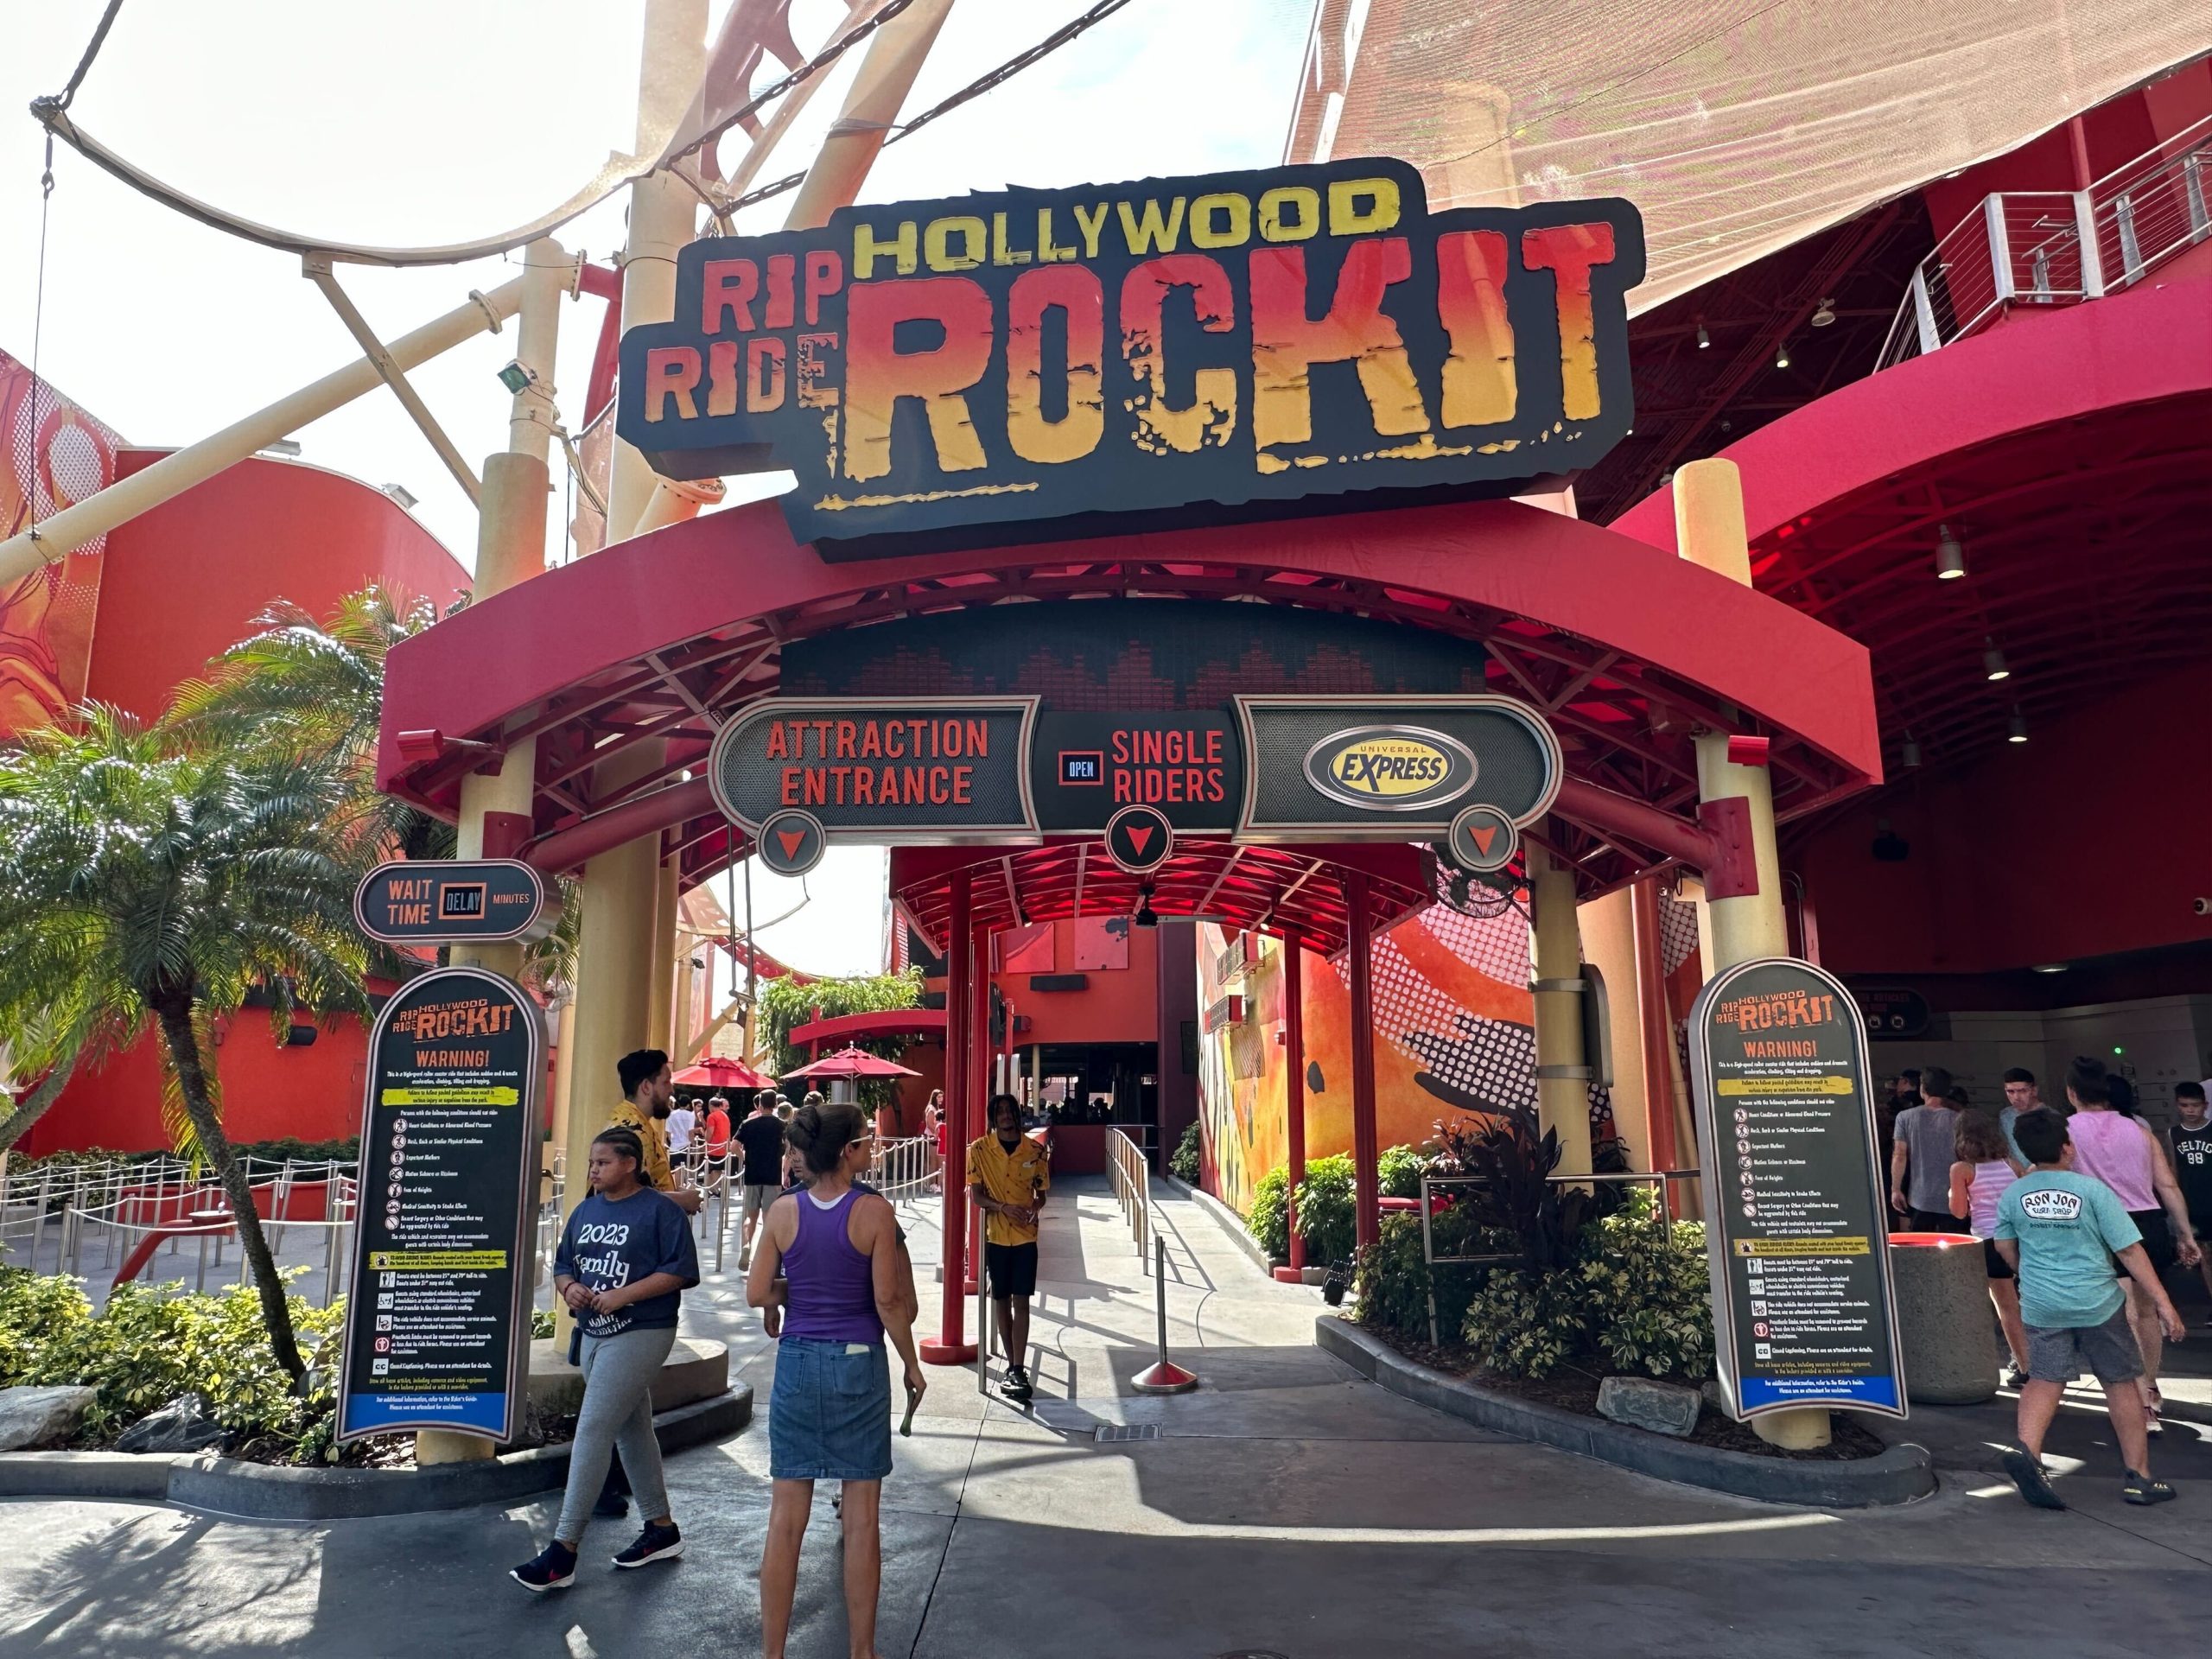 Hollywood Rip Ride Rockit entrance